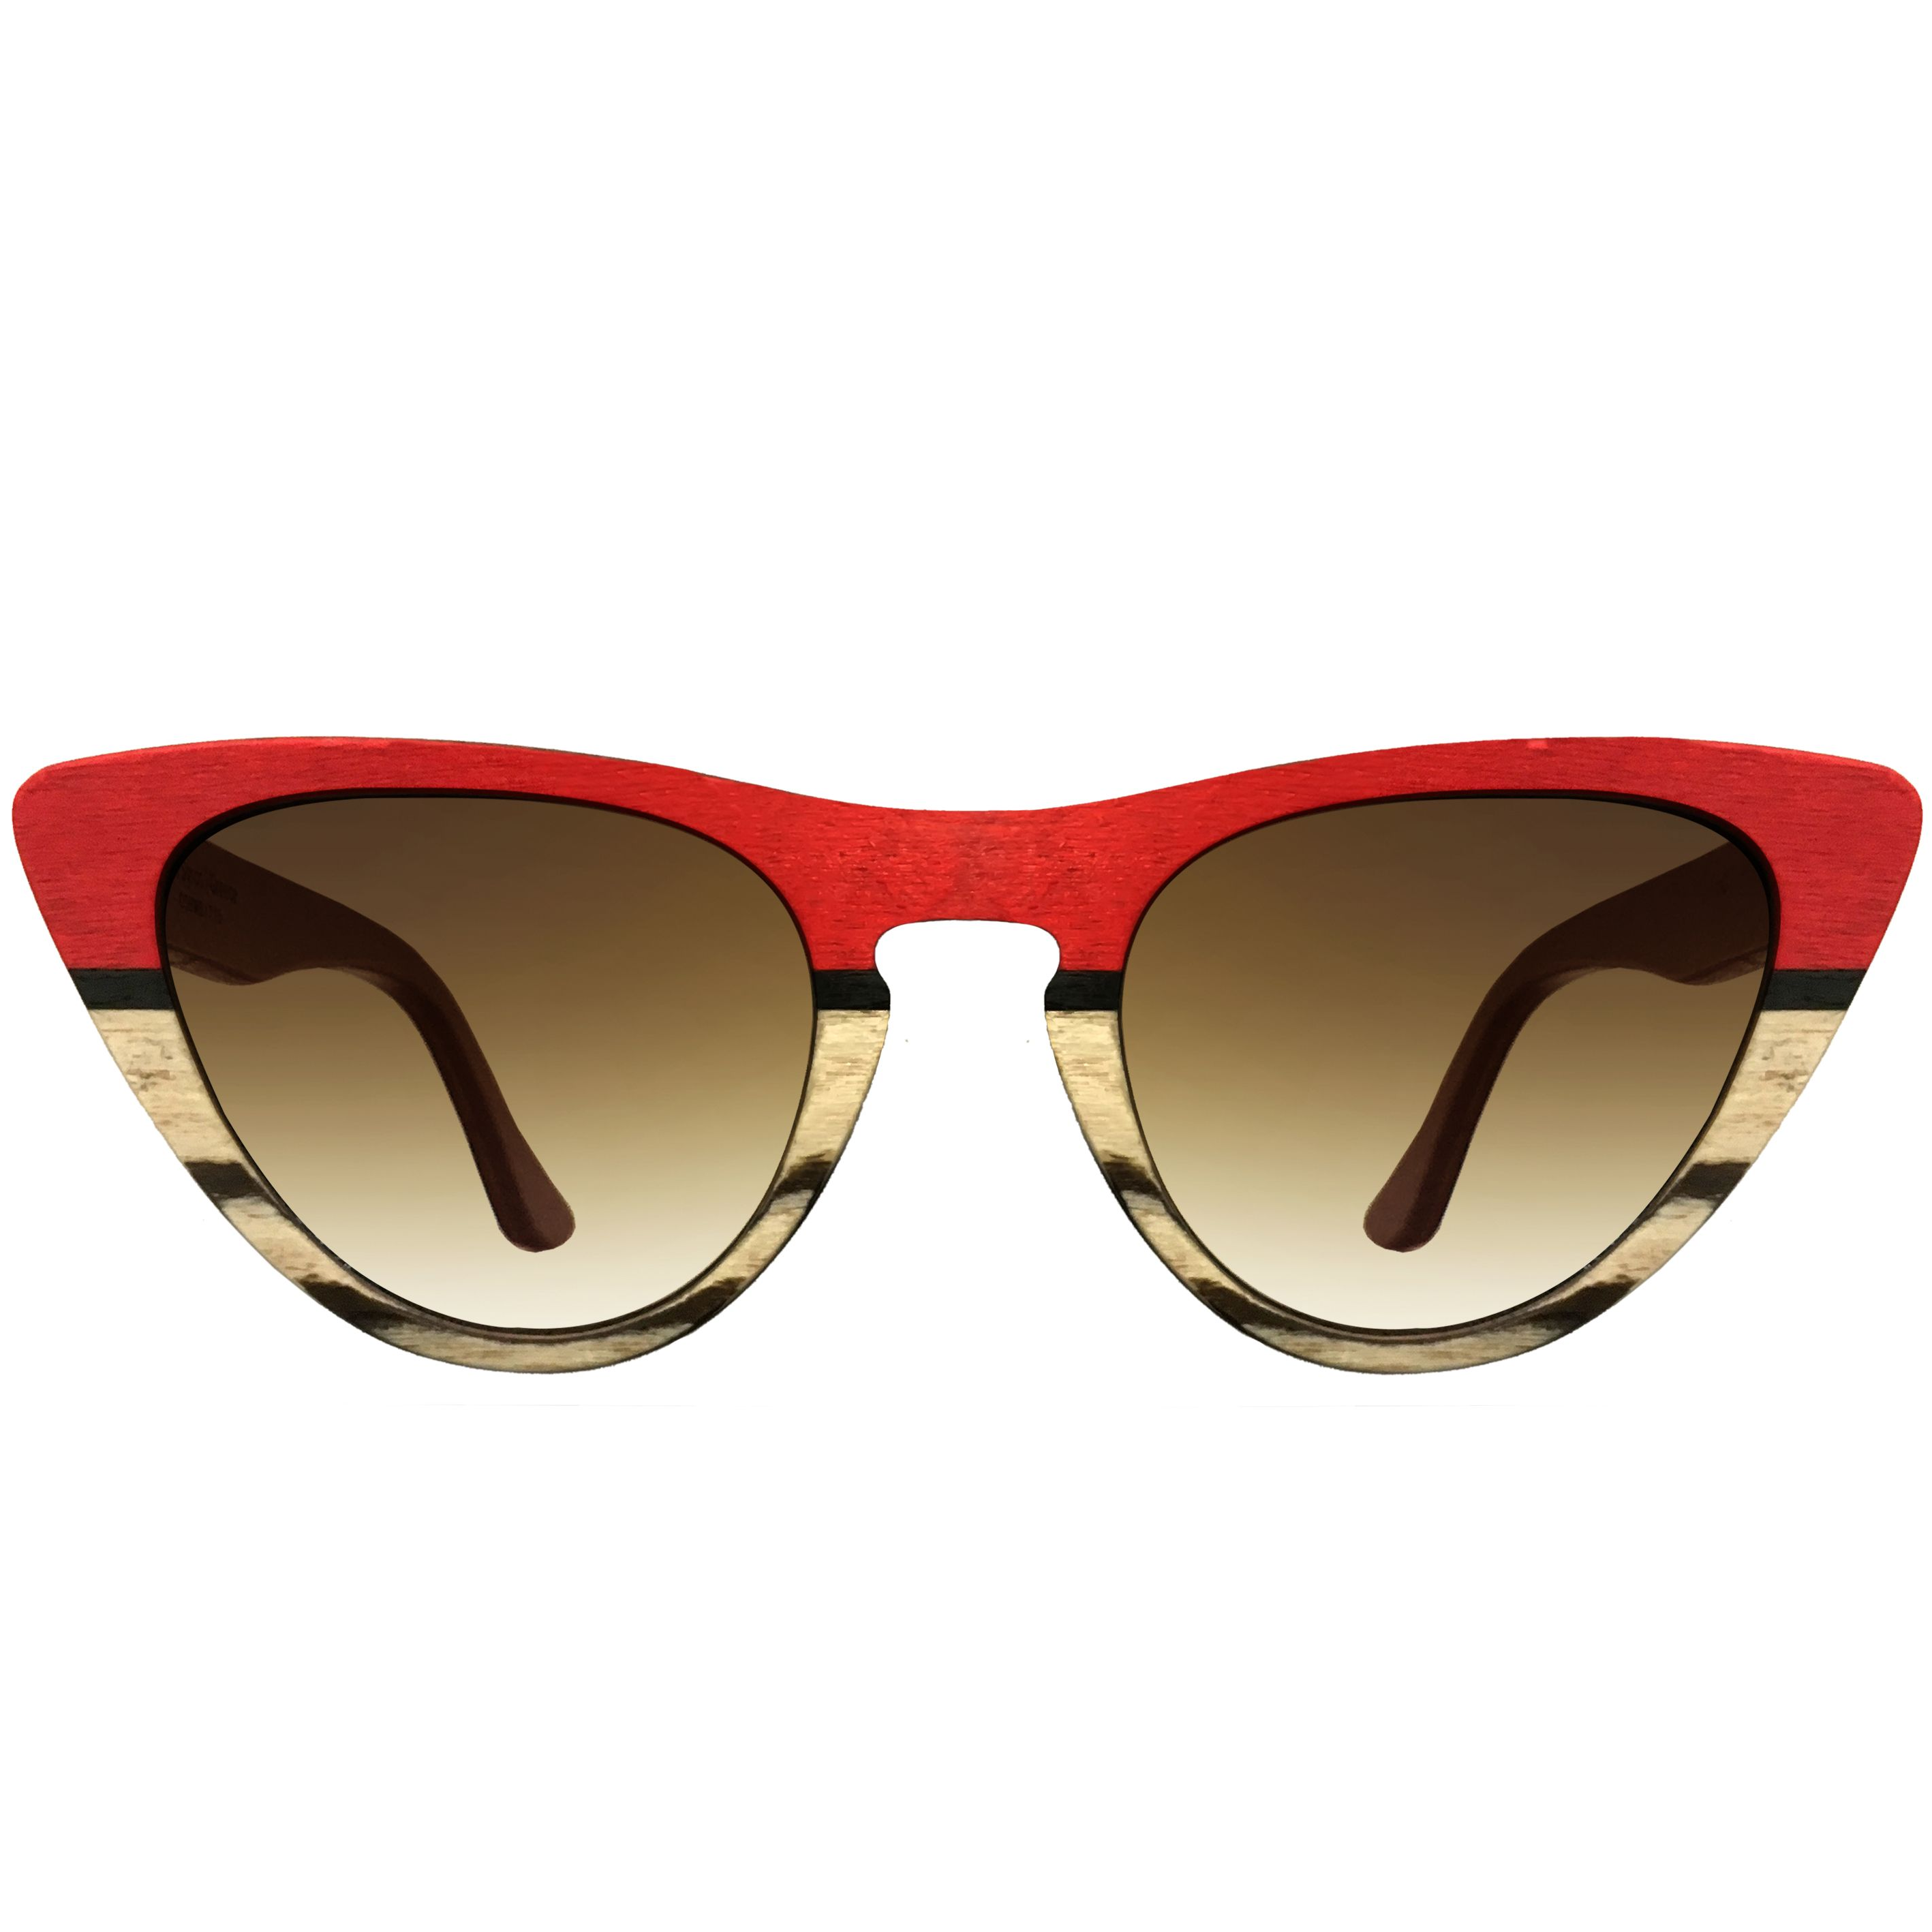 Zylo SAND RED ZEBRAWOOD sunglasses